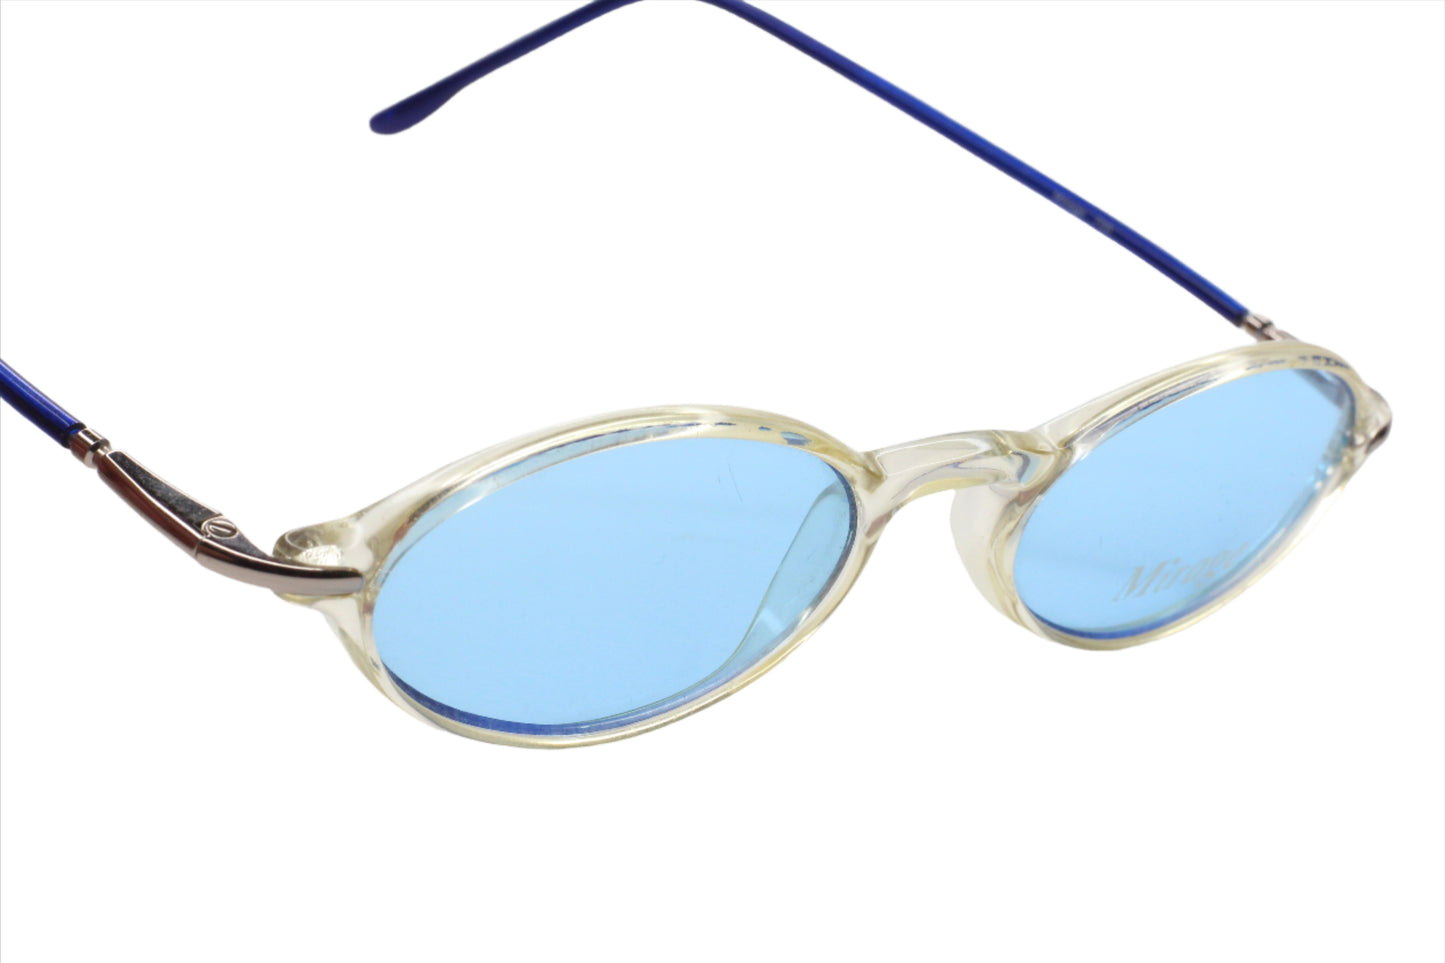 Mirage 700 Crystal Clear Light Blue Fashion Designer Sunglasses